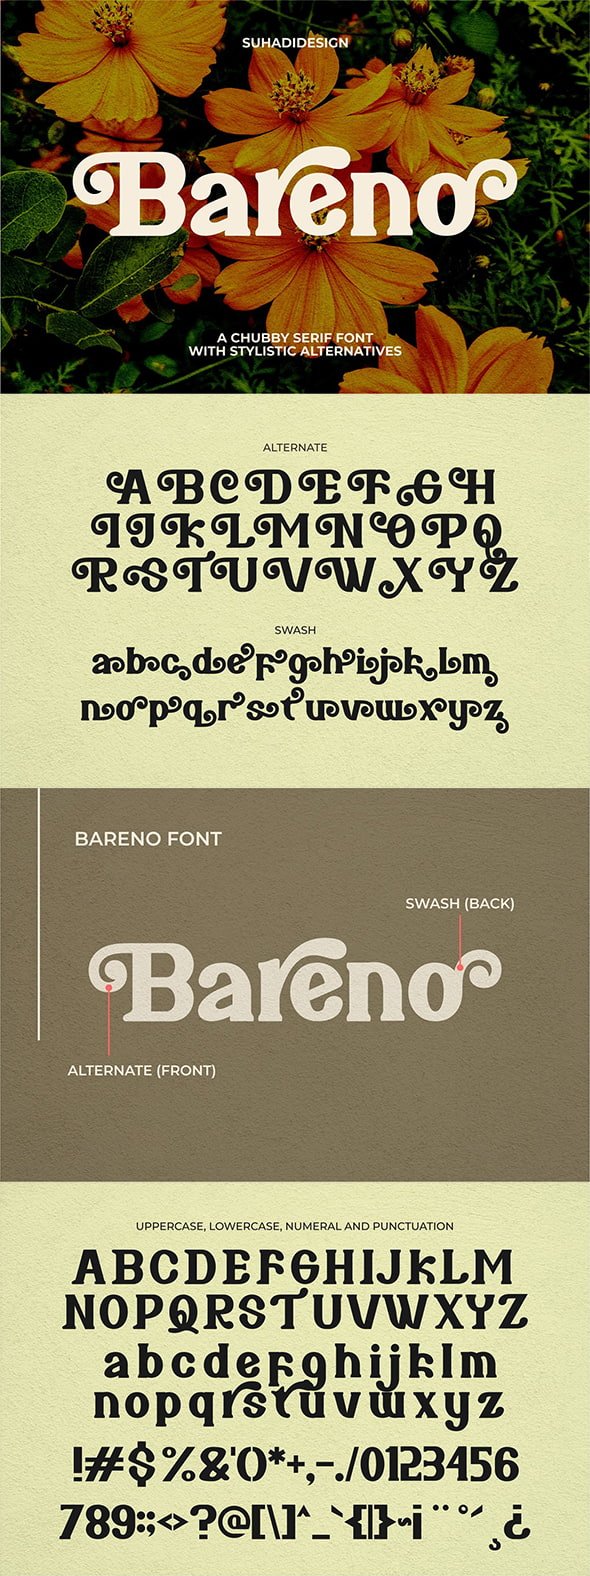 CreativeMarket - Bareno Modern Retro Serif Font - 10200299